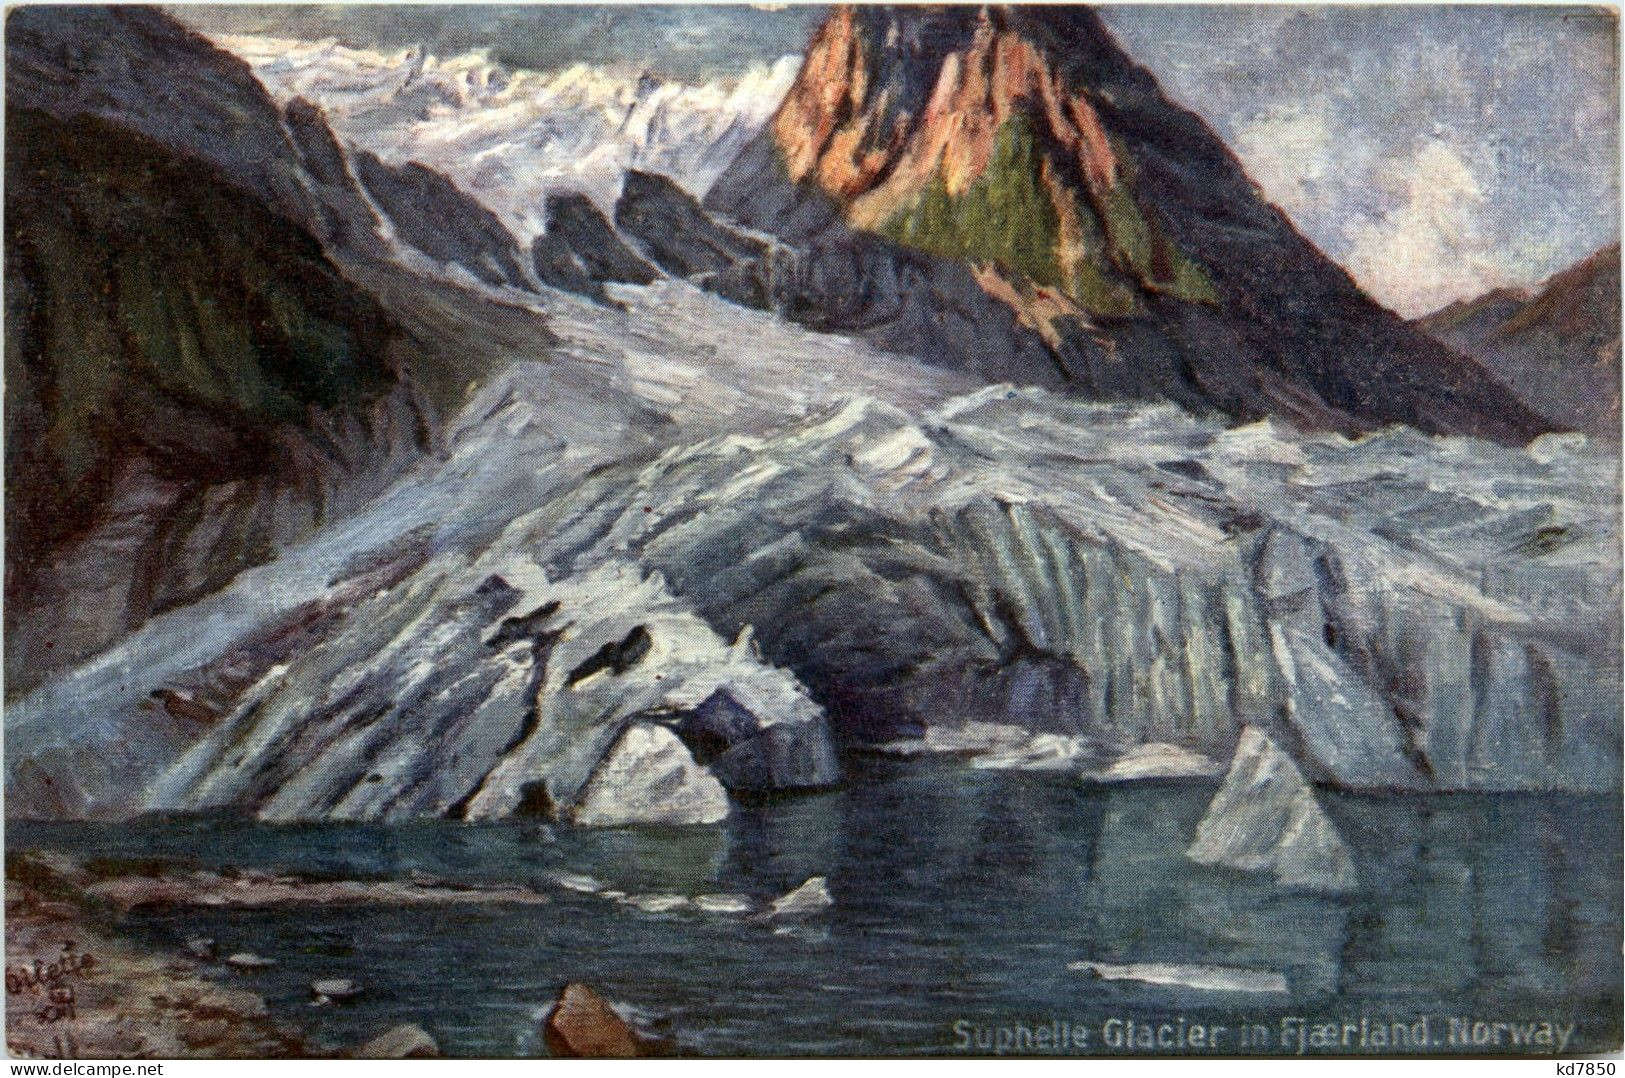 Saphelle Glacier - Norway